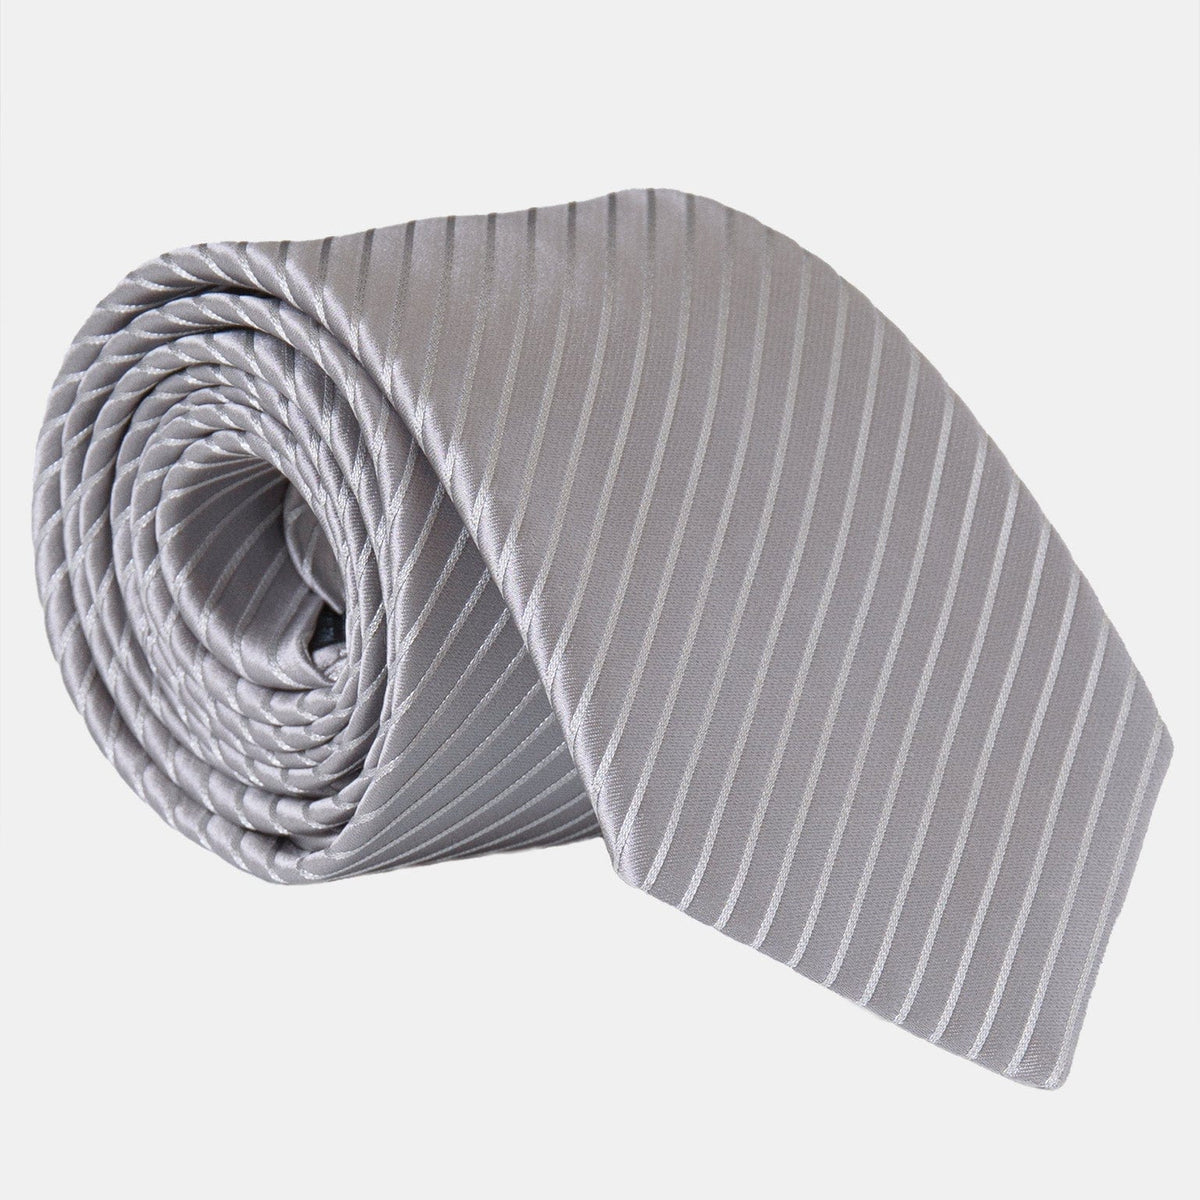 Italian Silk Tie - Formal Silver Striped